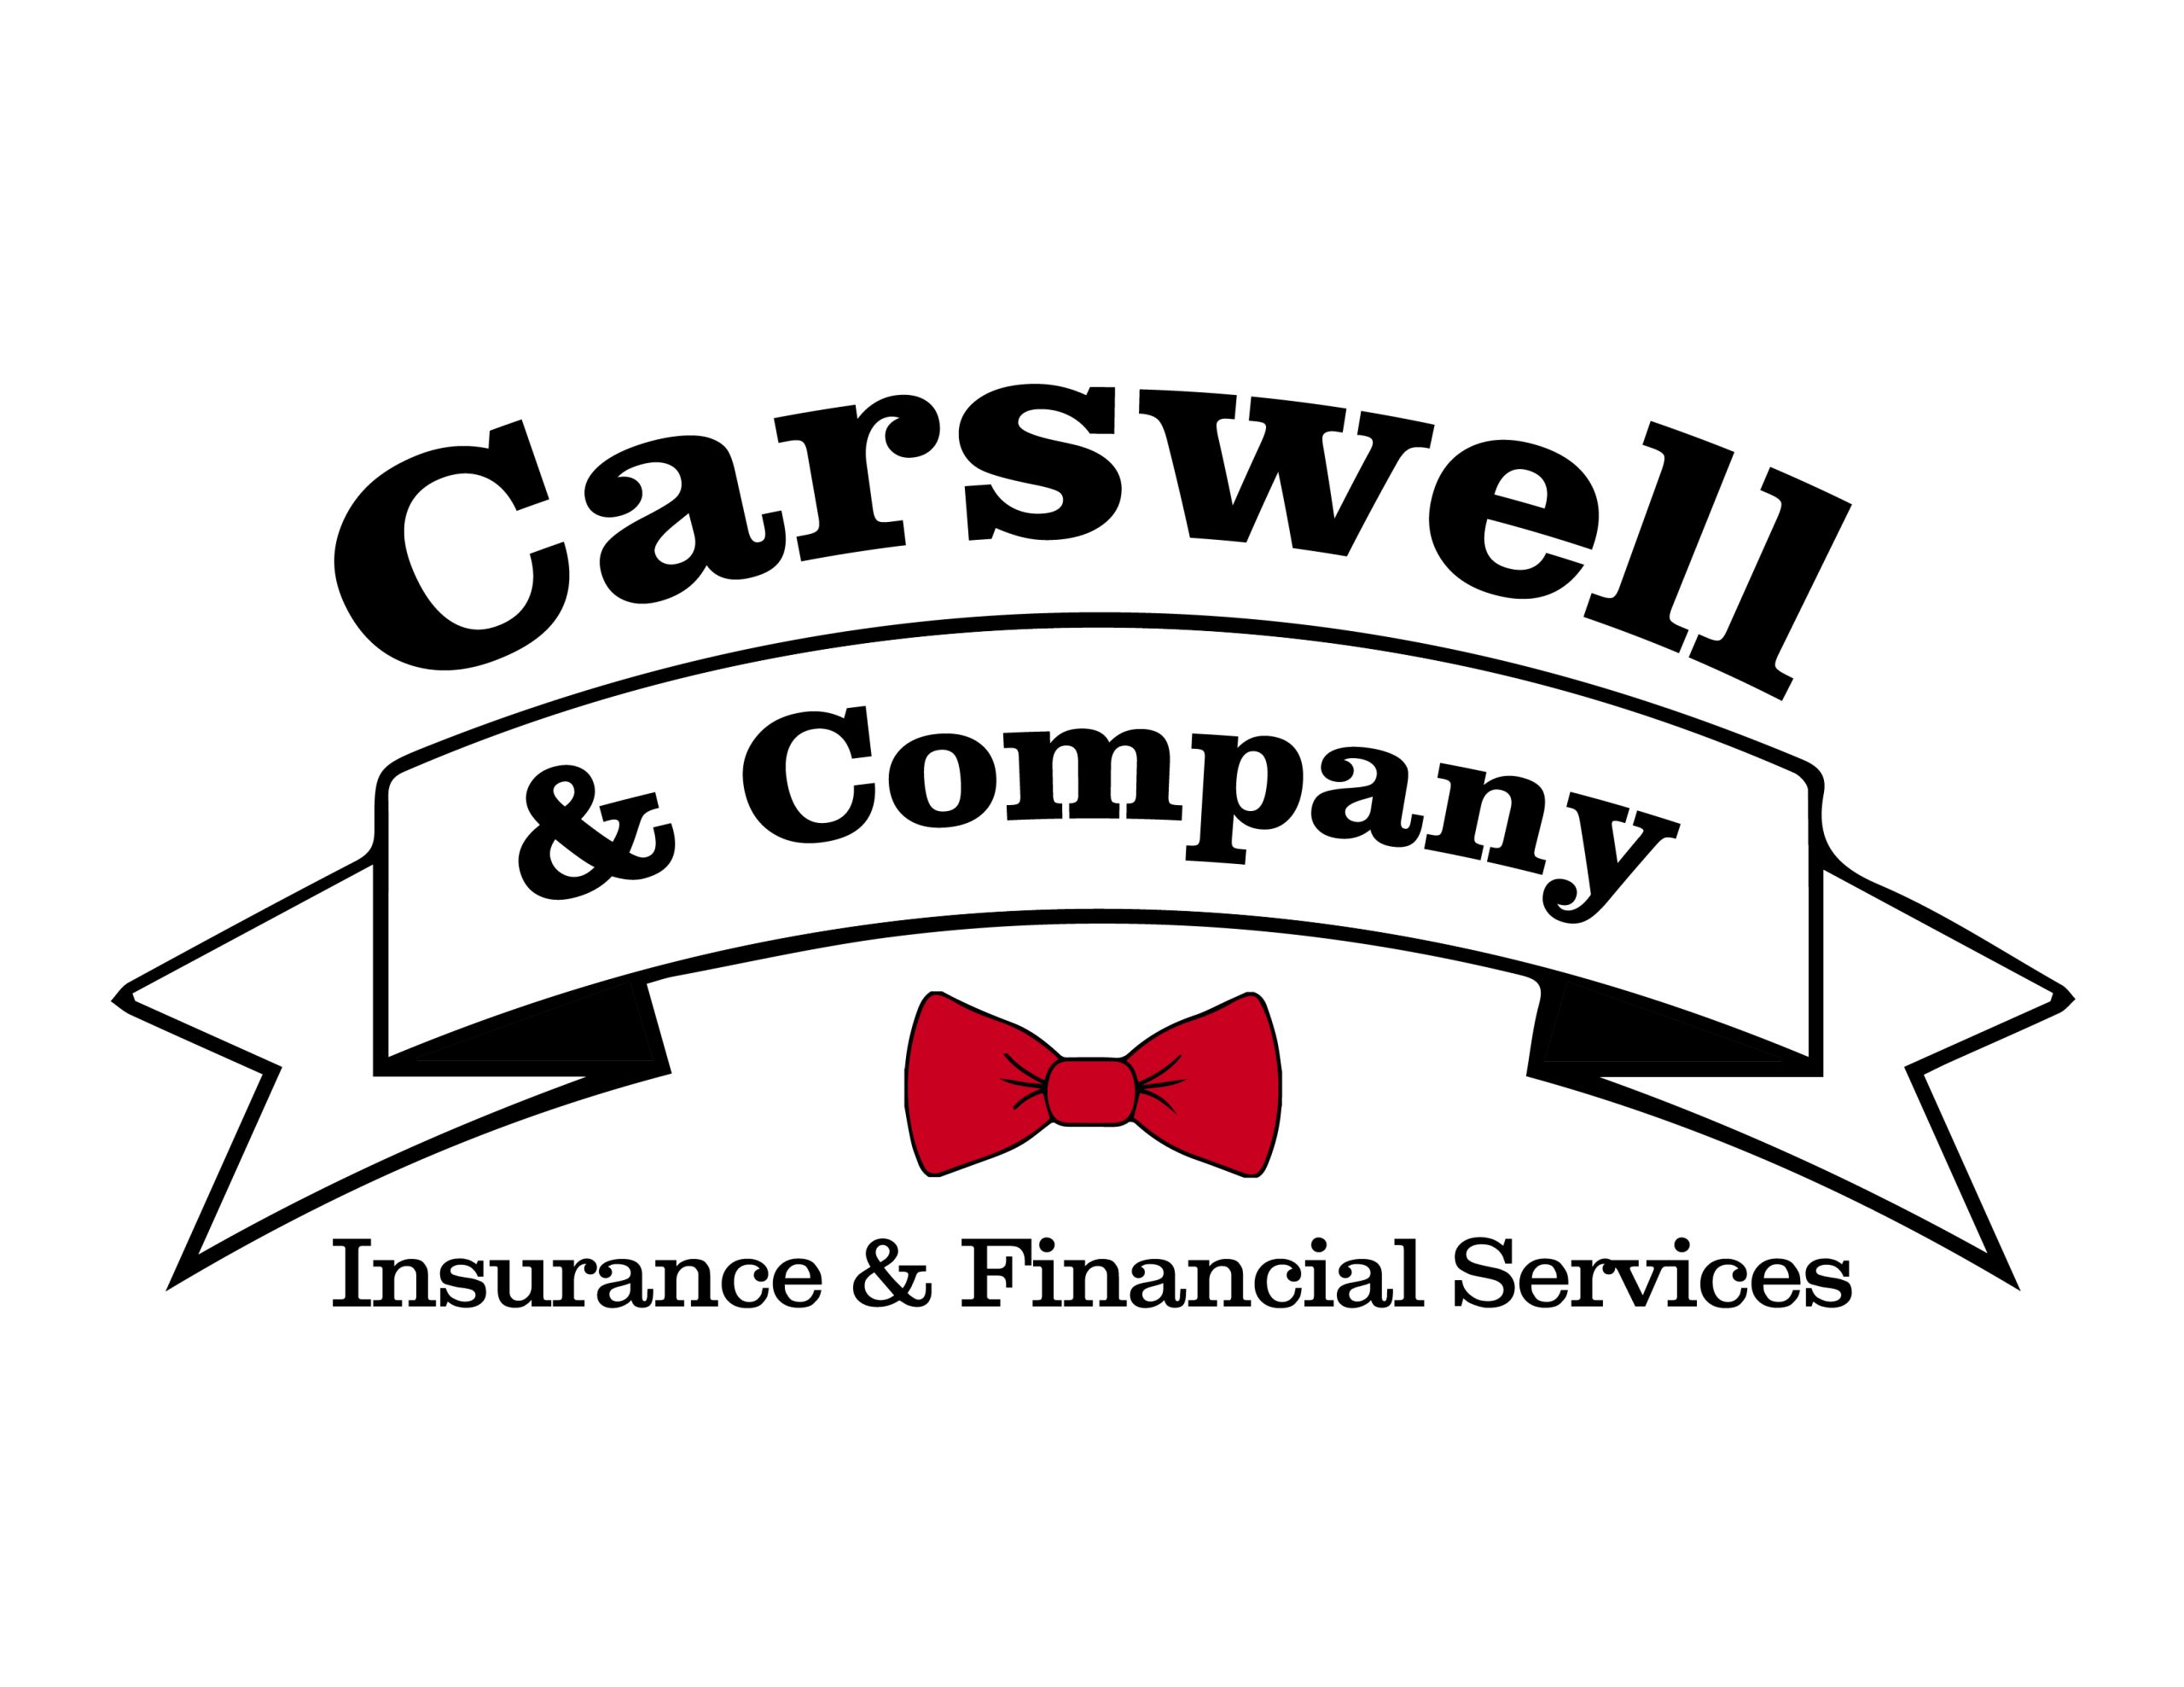 Carswell & Company